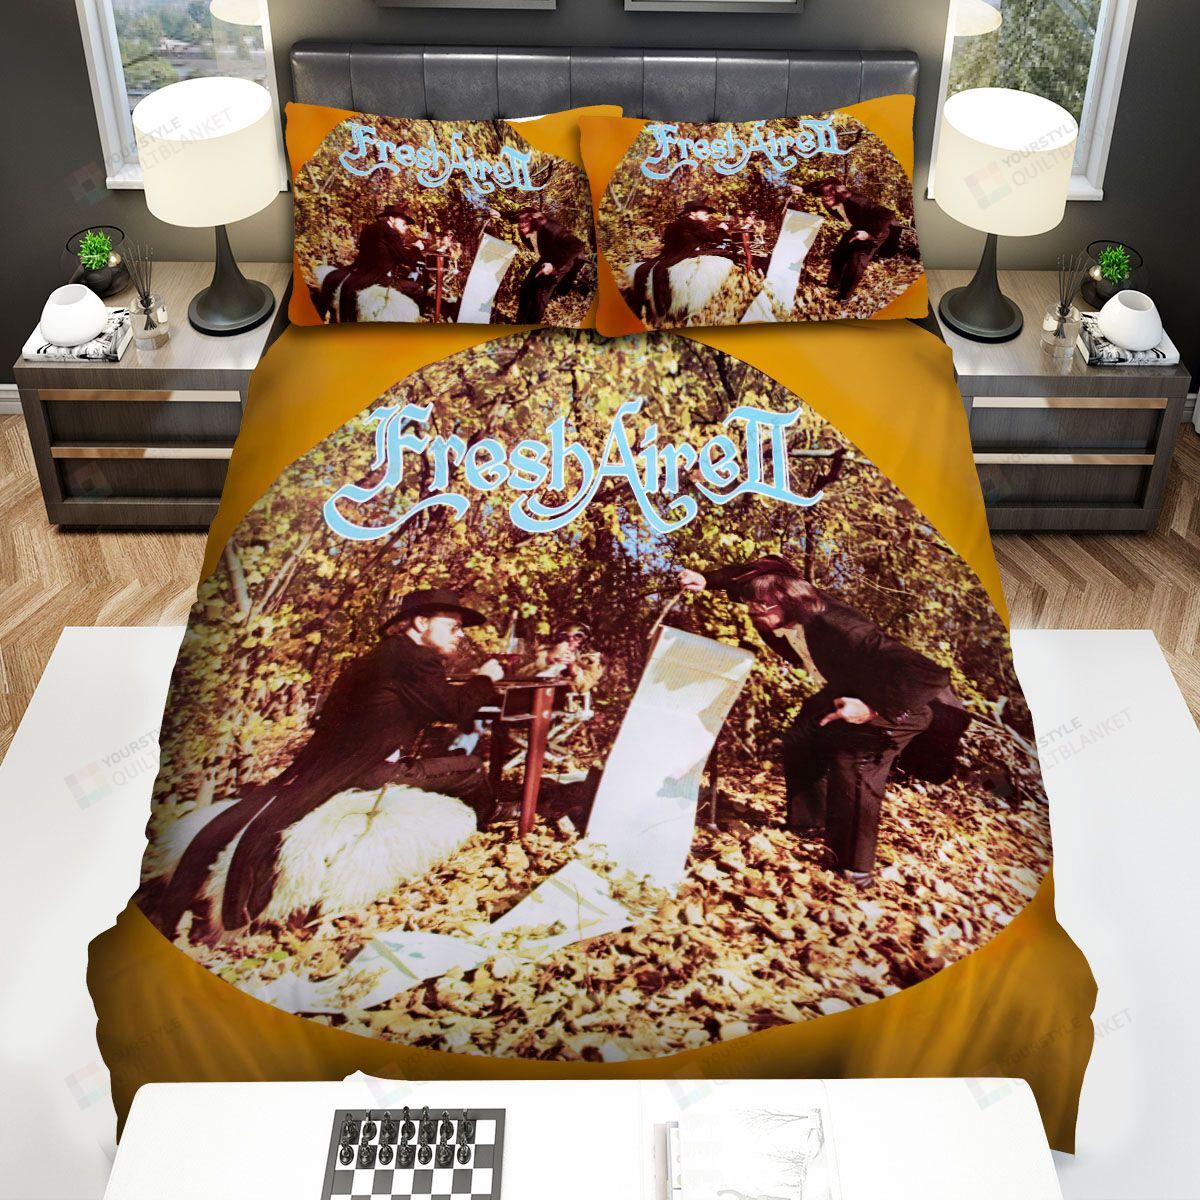 Mannheim Steamroller Band  Fresh Aire Ii Bed Sheets Spread Comforter Duvet Cover Bedding Sets